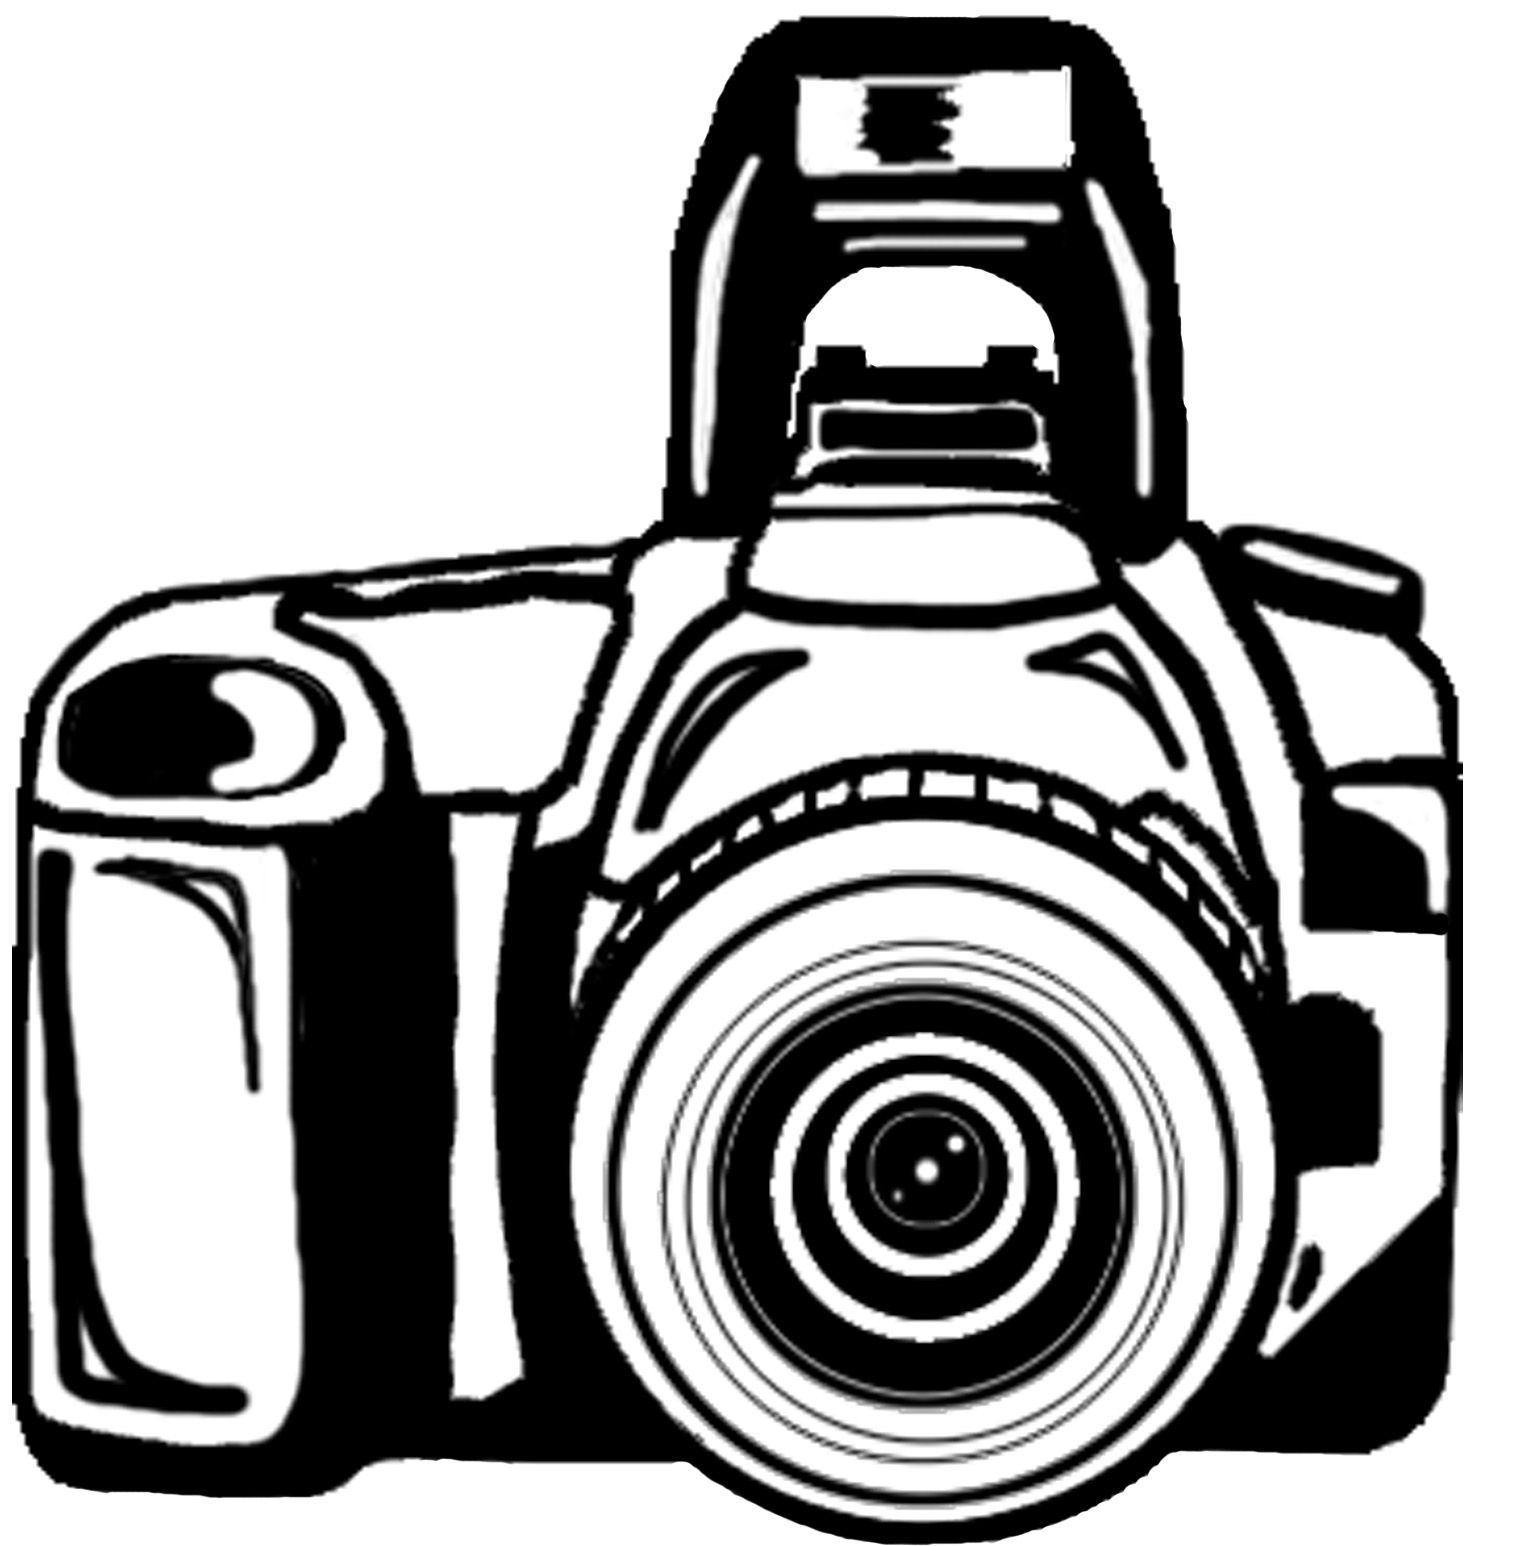 Free drawn download clip. Clipart camera professional camera